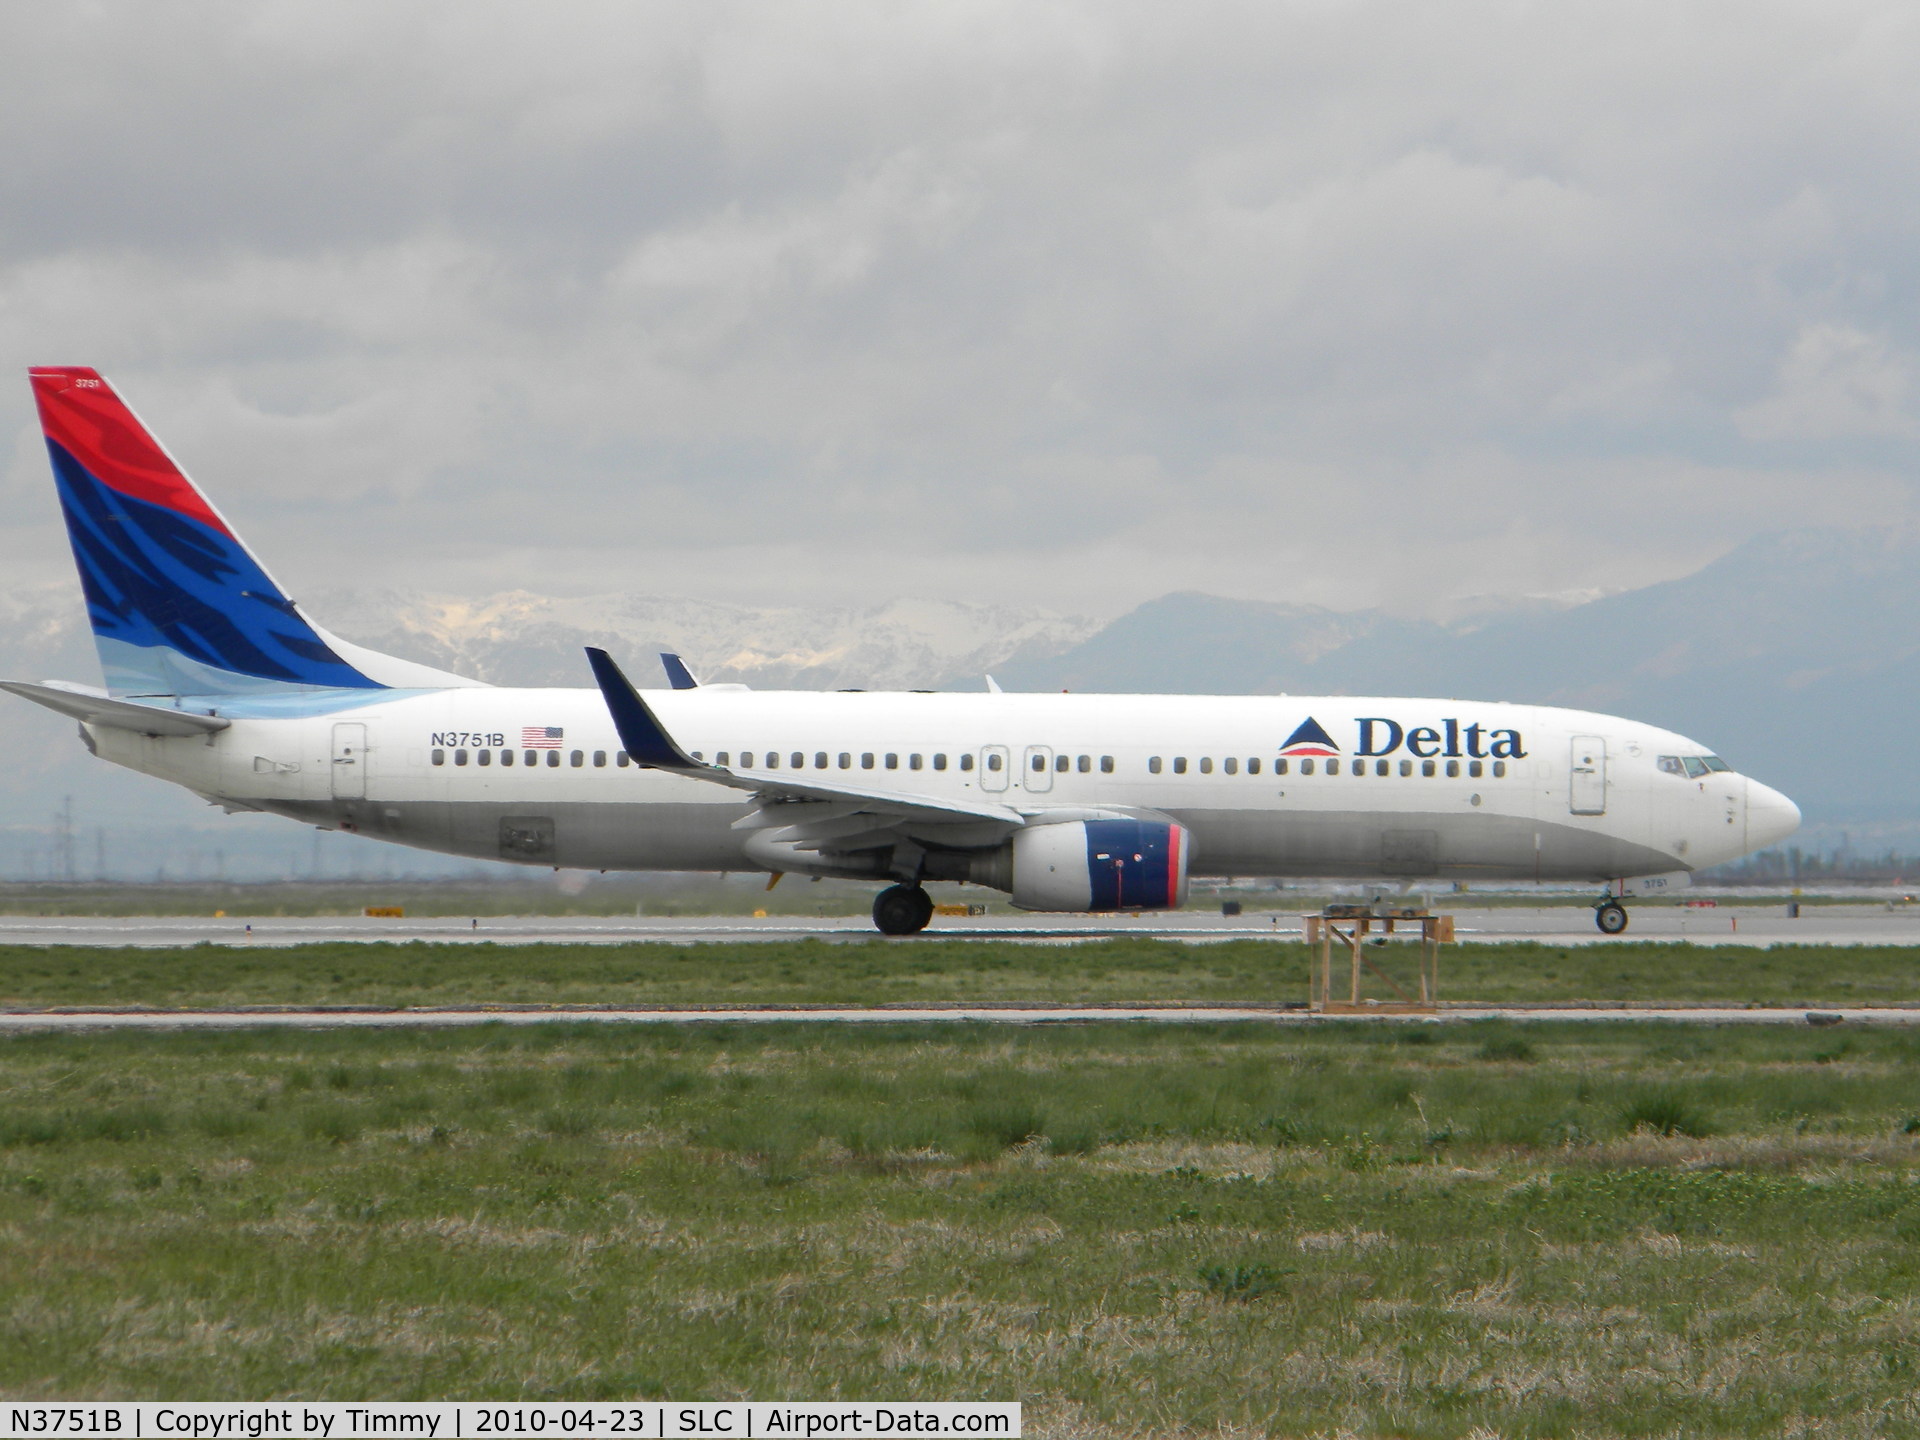 N3751B, 2001 Boeing 737-832 C/N 30491, It is taxiing at Salt Lake City Intl airport, ready to takeoff.